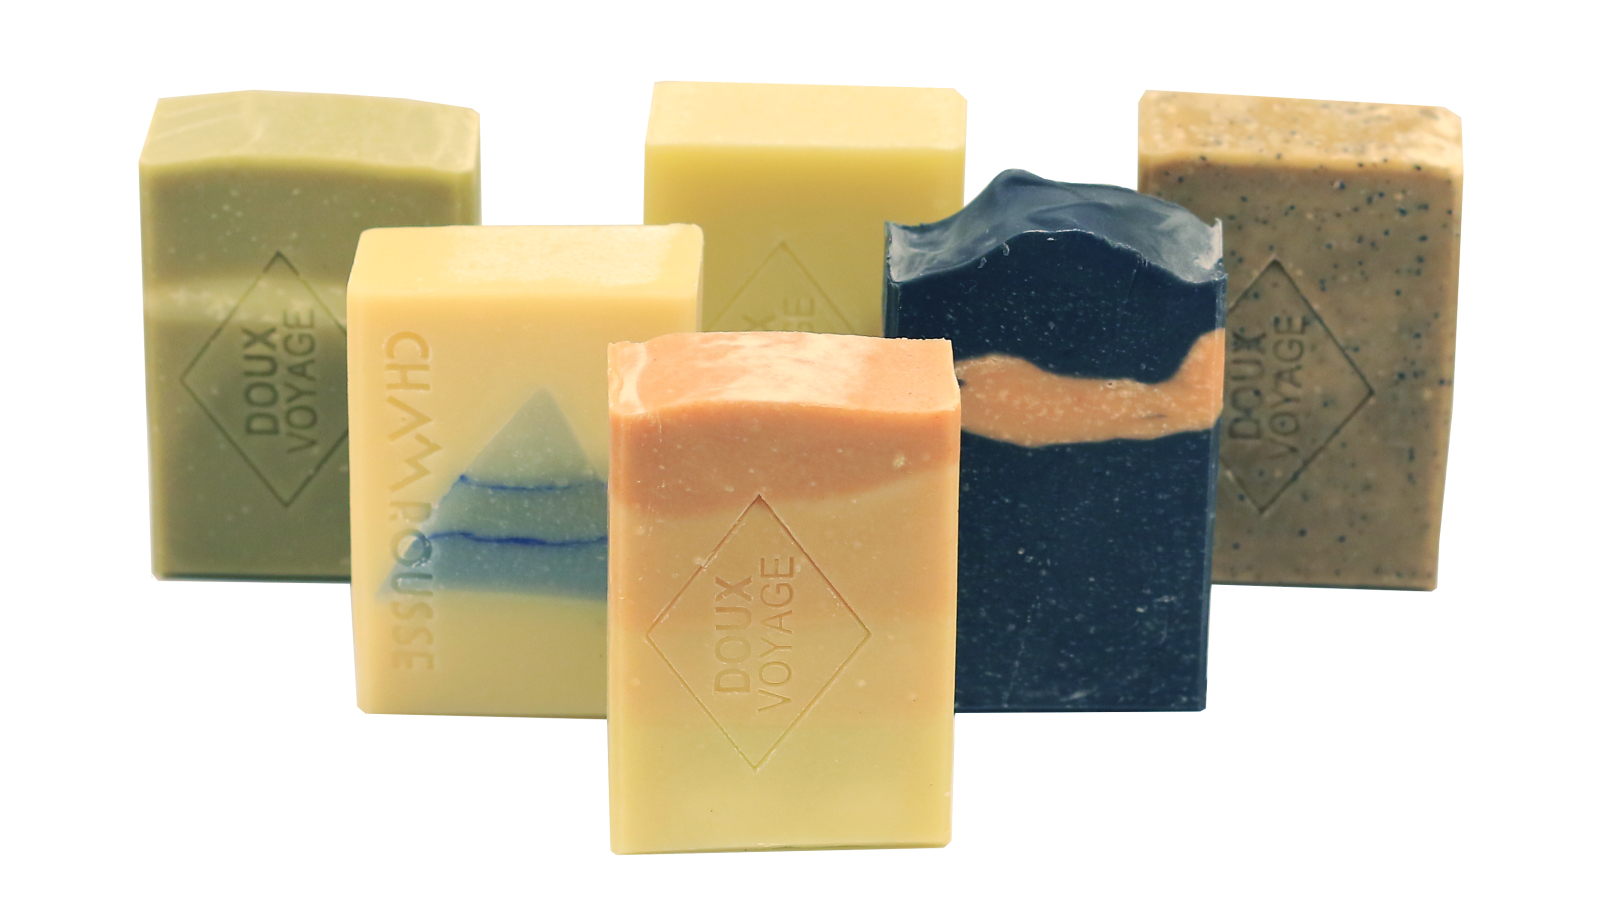 Doux Voyage soap range photo